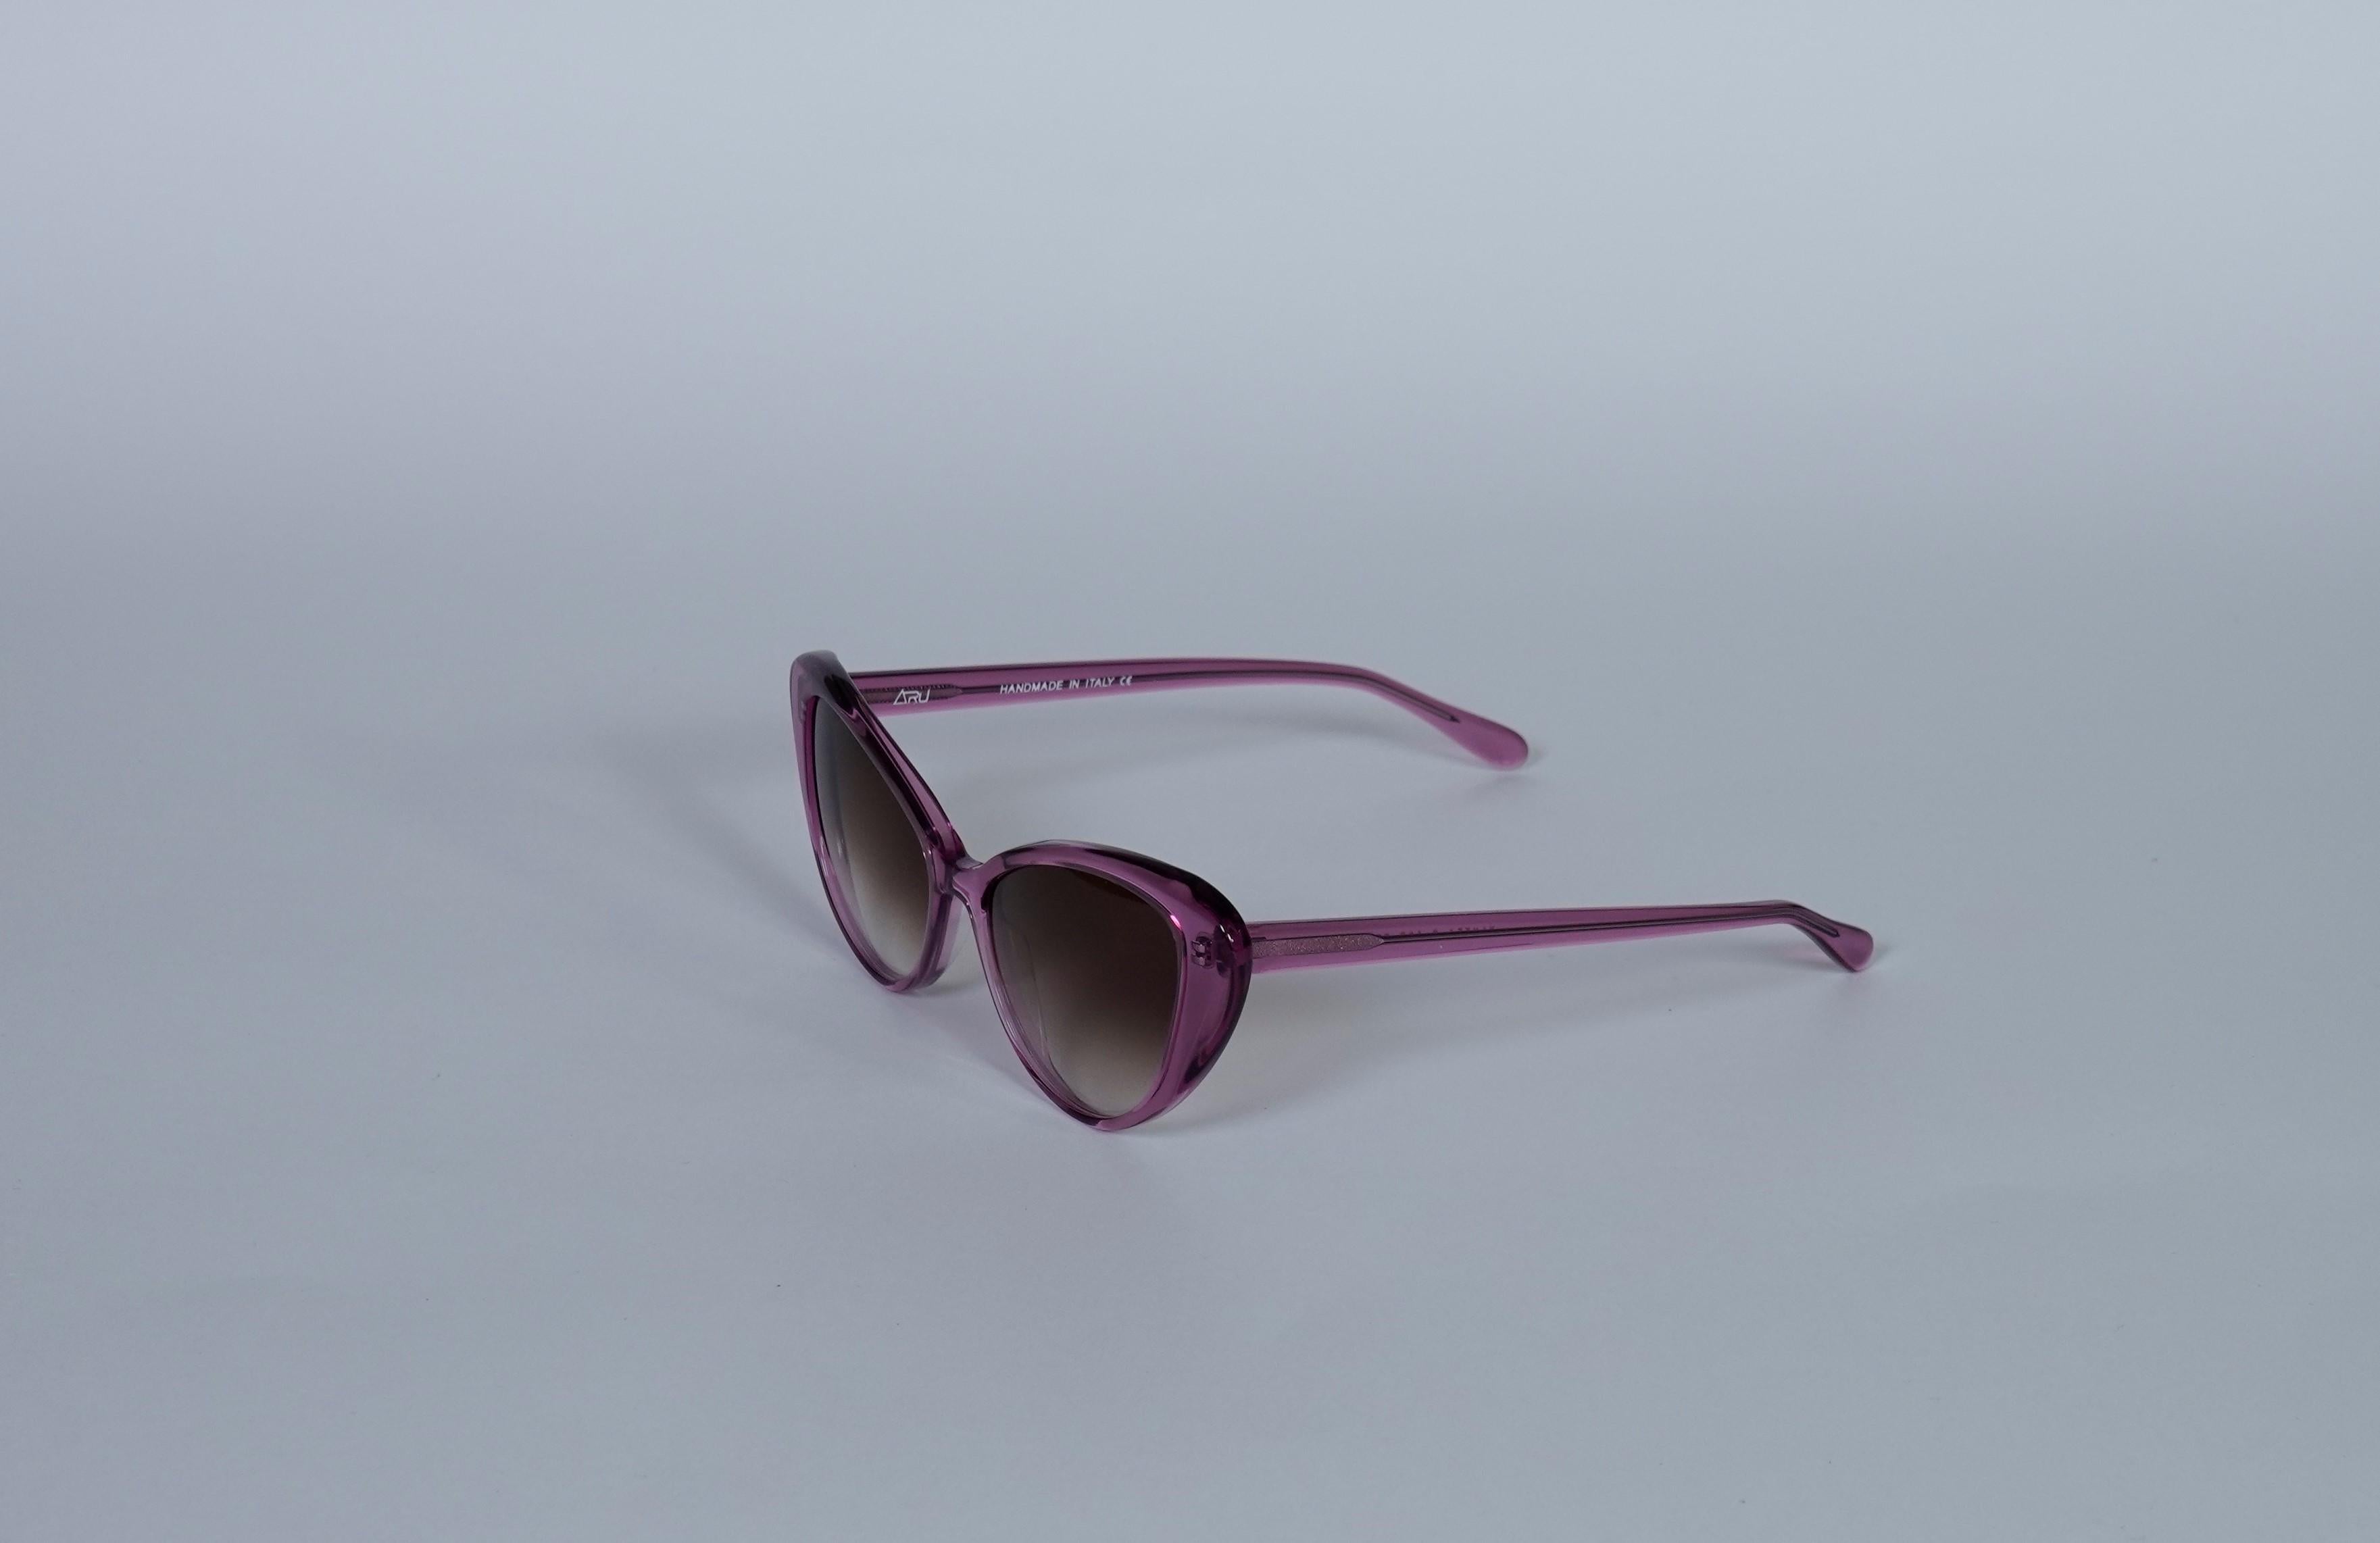 Aru Eyewear pink sunglasses
totally made in italy